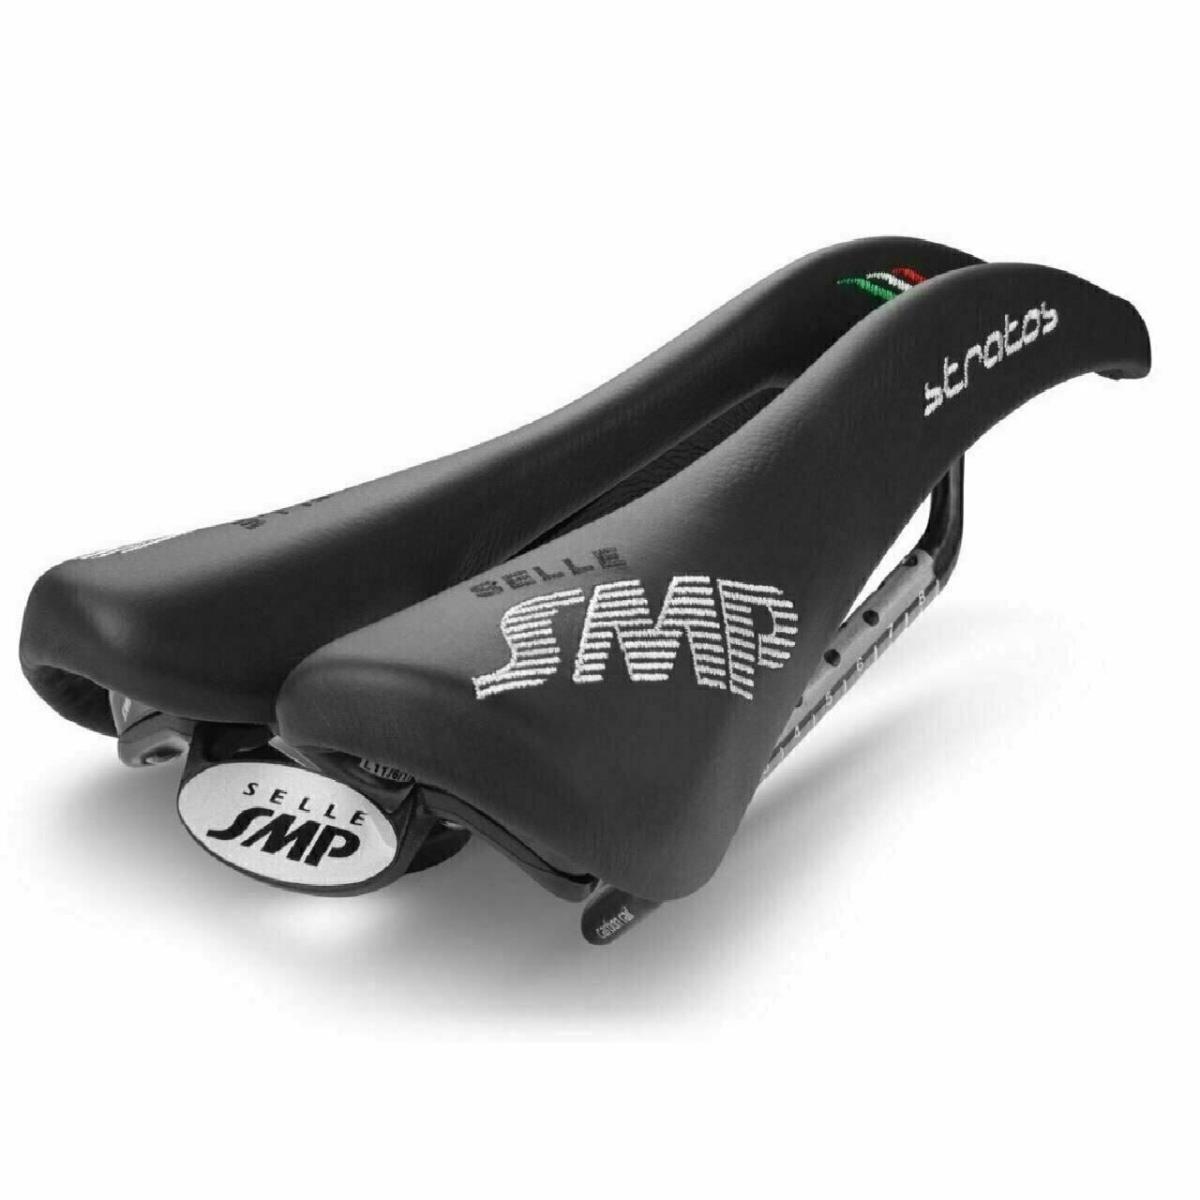 Selle Smp Stratos Carbon Rail Pro Bike Saddle Bike Seat - Black